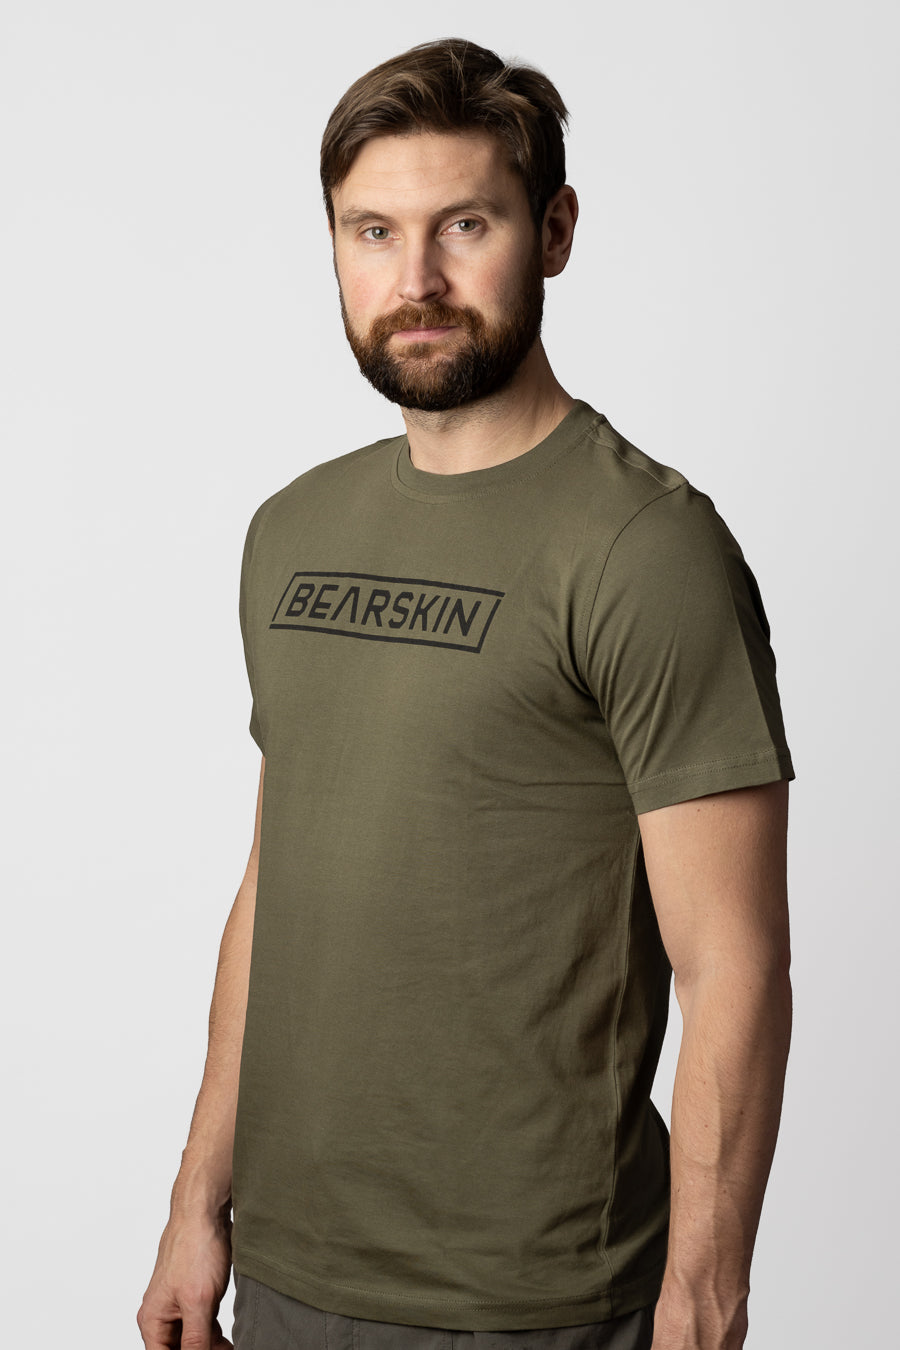 Bearskin T-Shirt Green